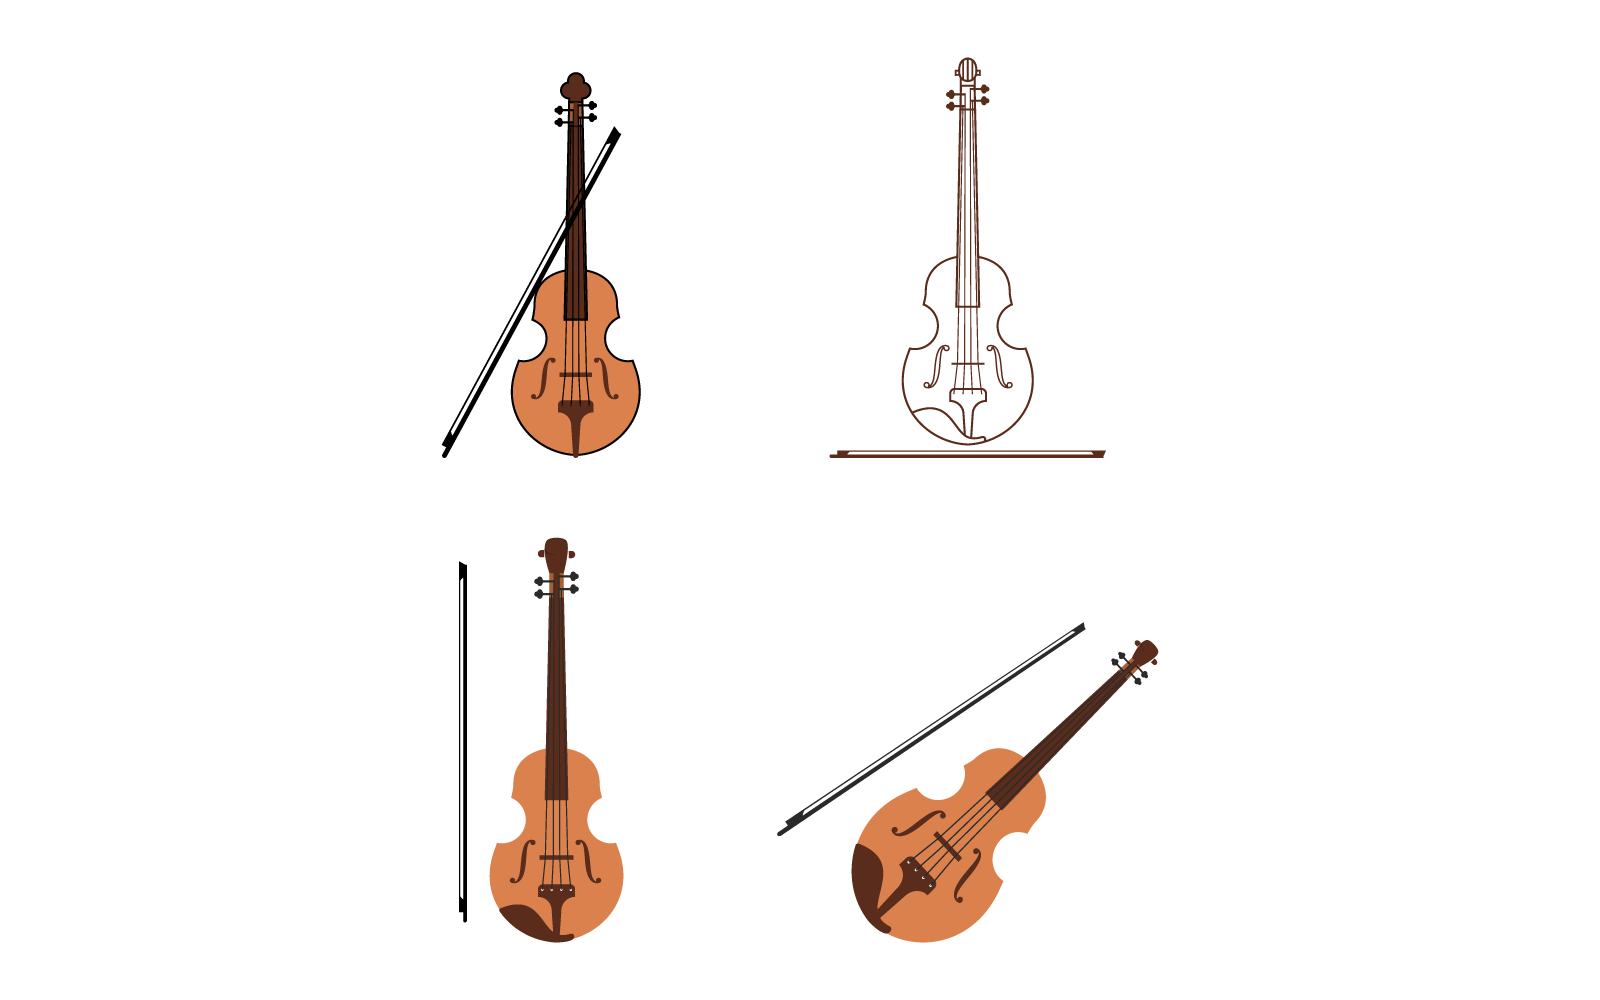 Violin illustration vector flat design eps 10